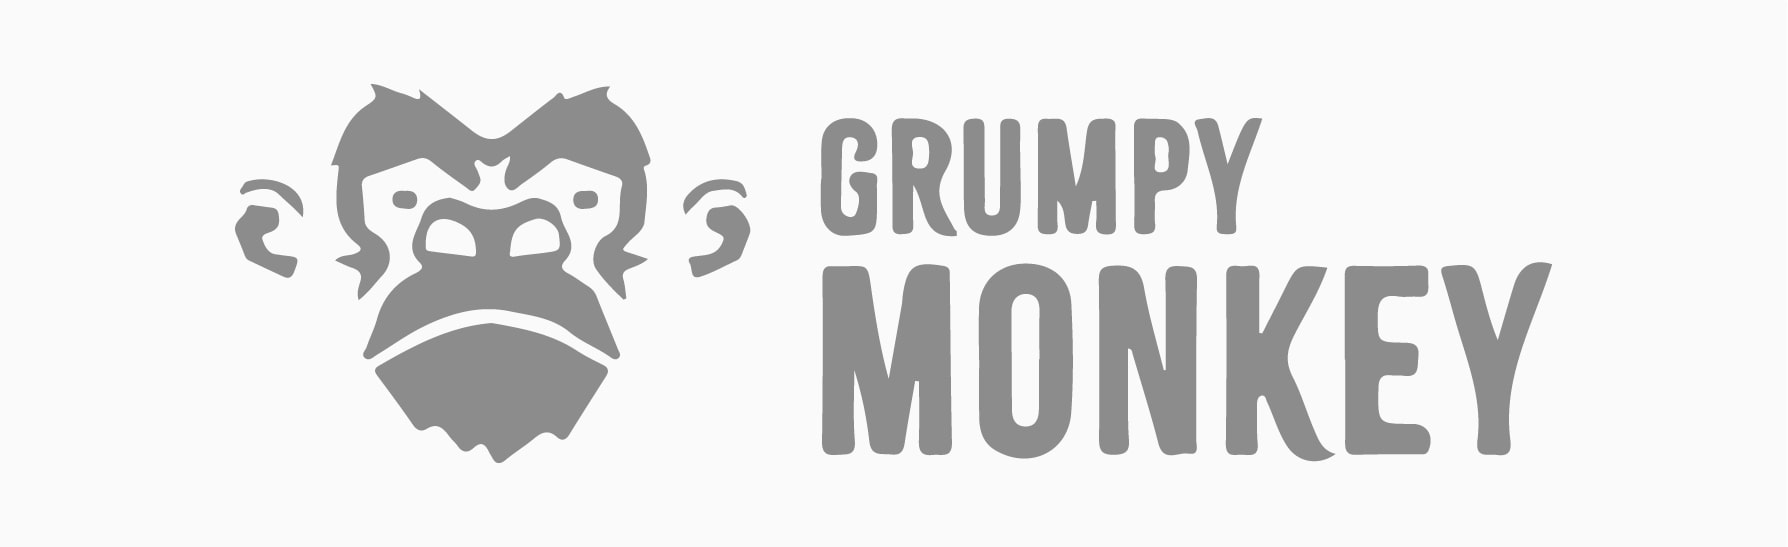 GrumpyMonkey-01-min